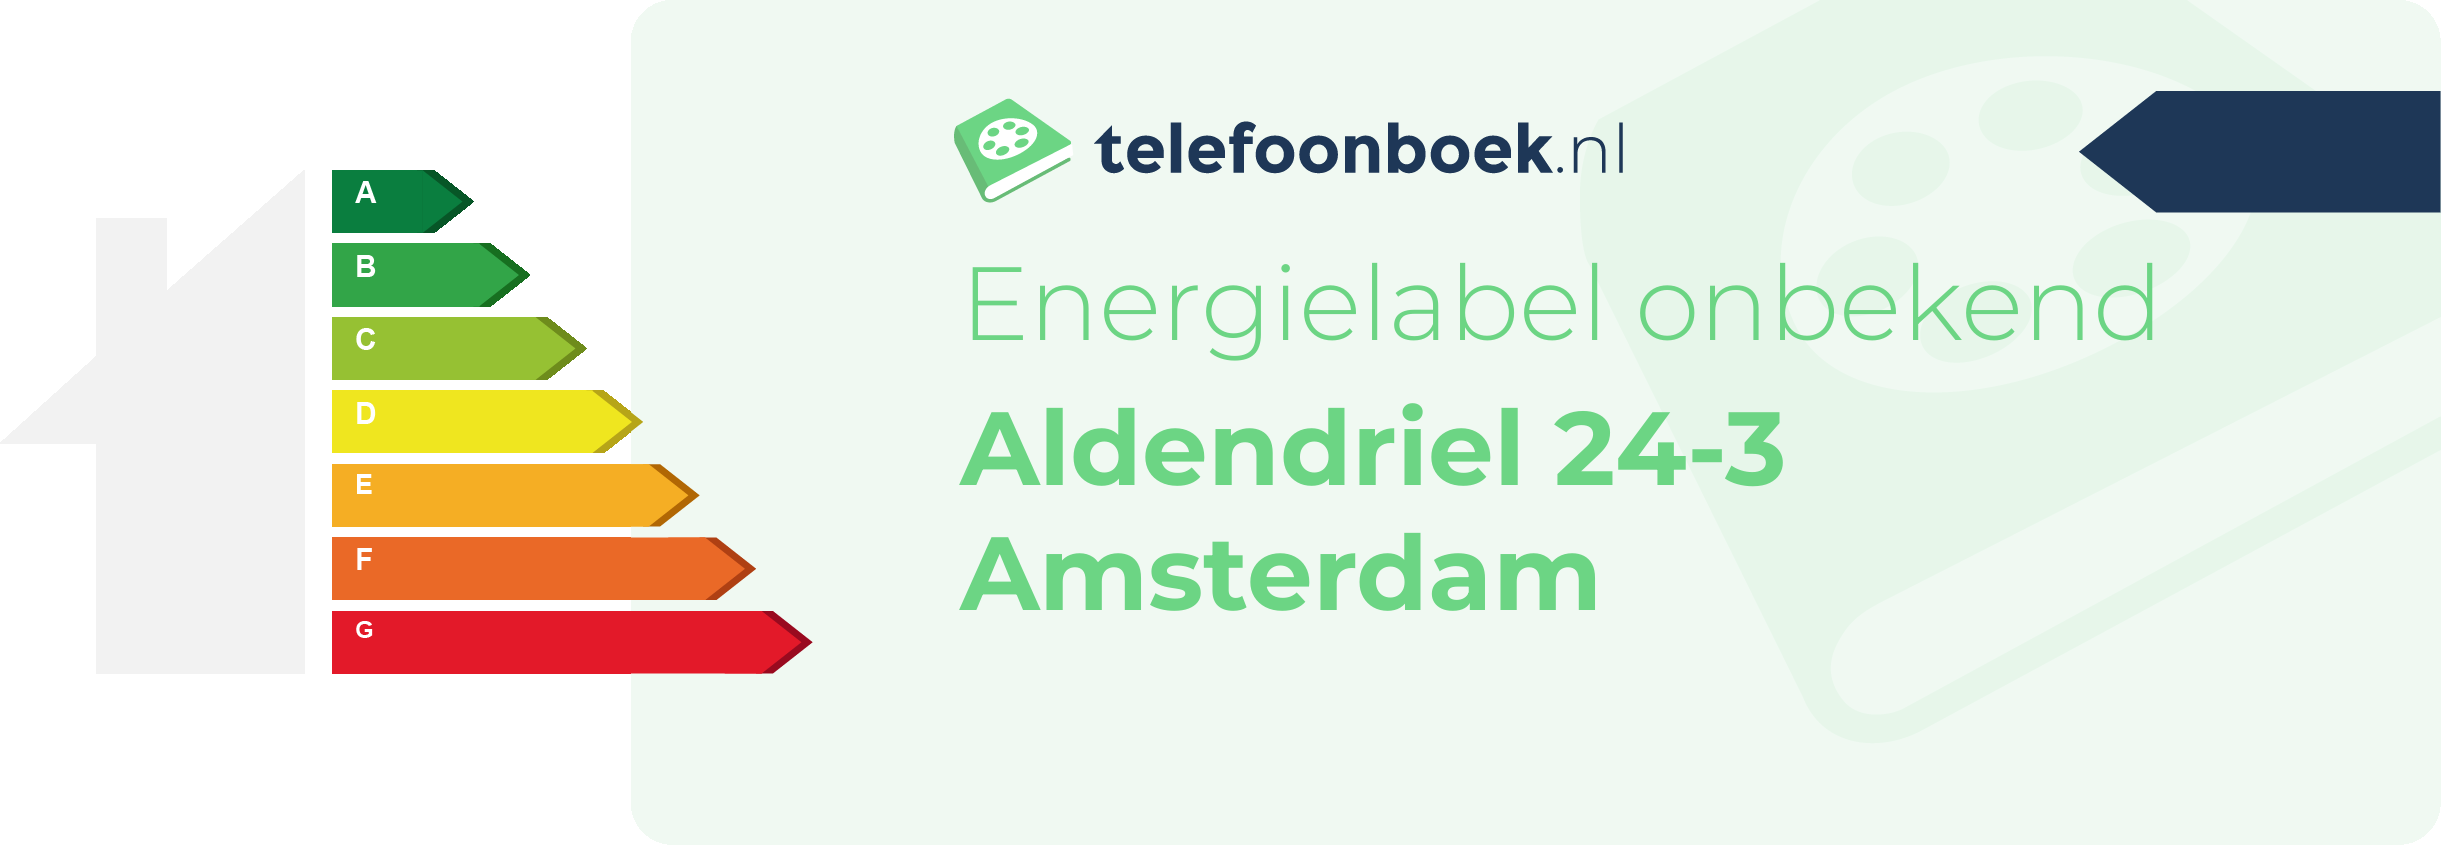 Energielabel Aldendriel 24-3 Amsterdam